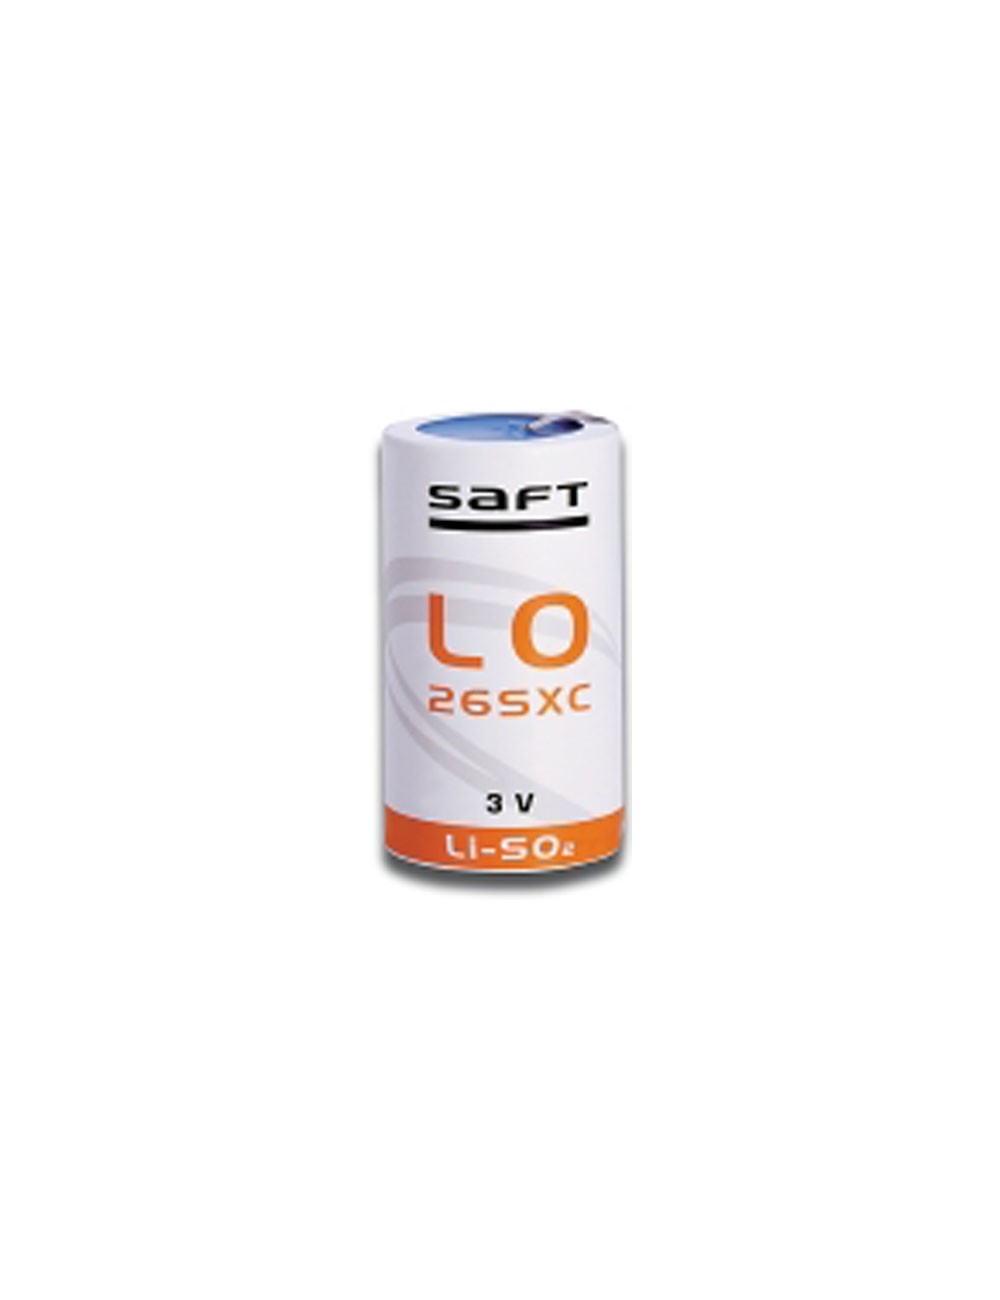 Lithium batterij 3V 9,2Ah High Drain LO 26 SXC